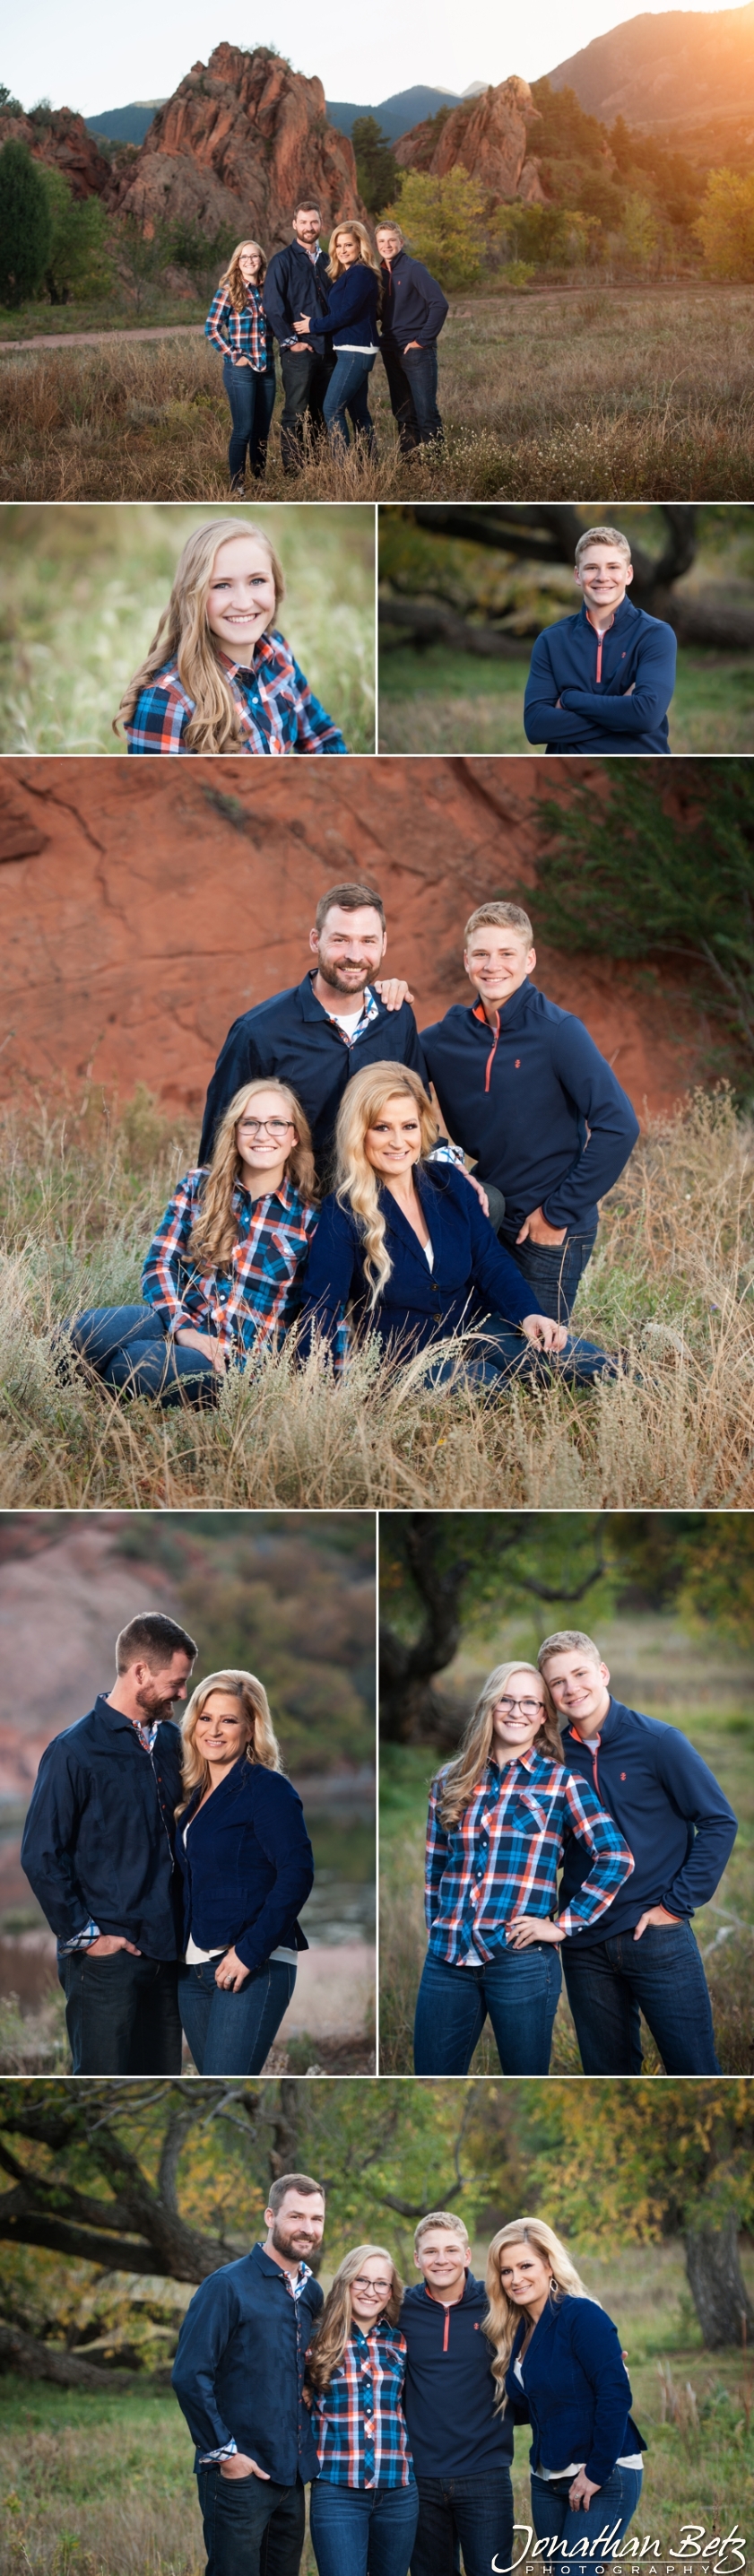 Colorado Springs Family Portraits Photographer Jonathan Betz Photography Red Rock Canyon 1